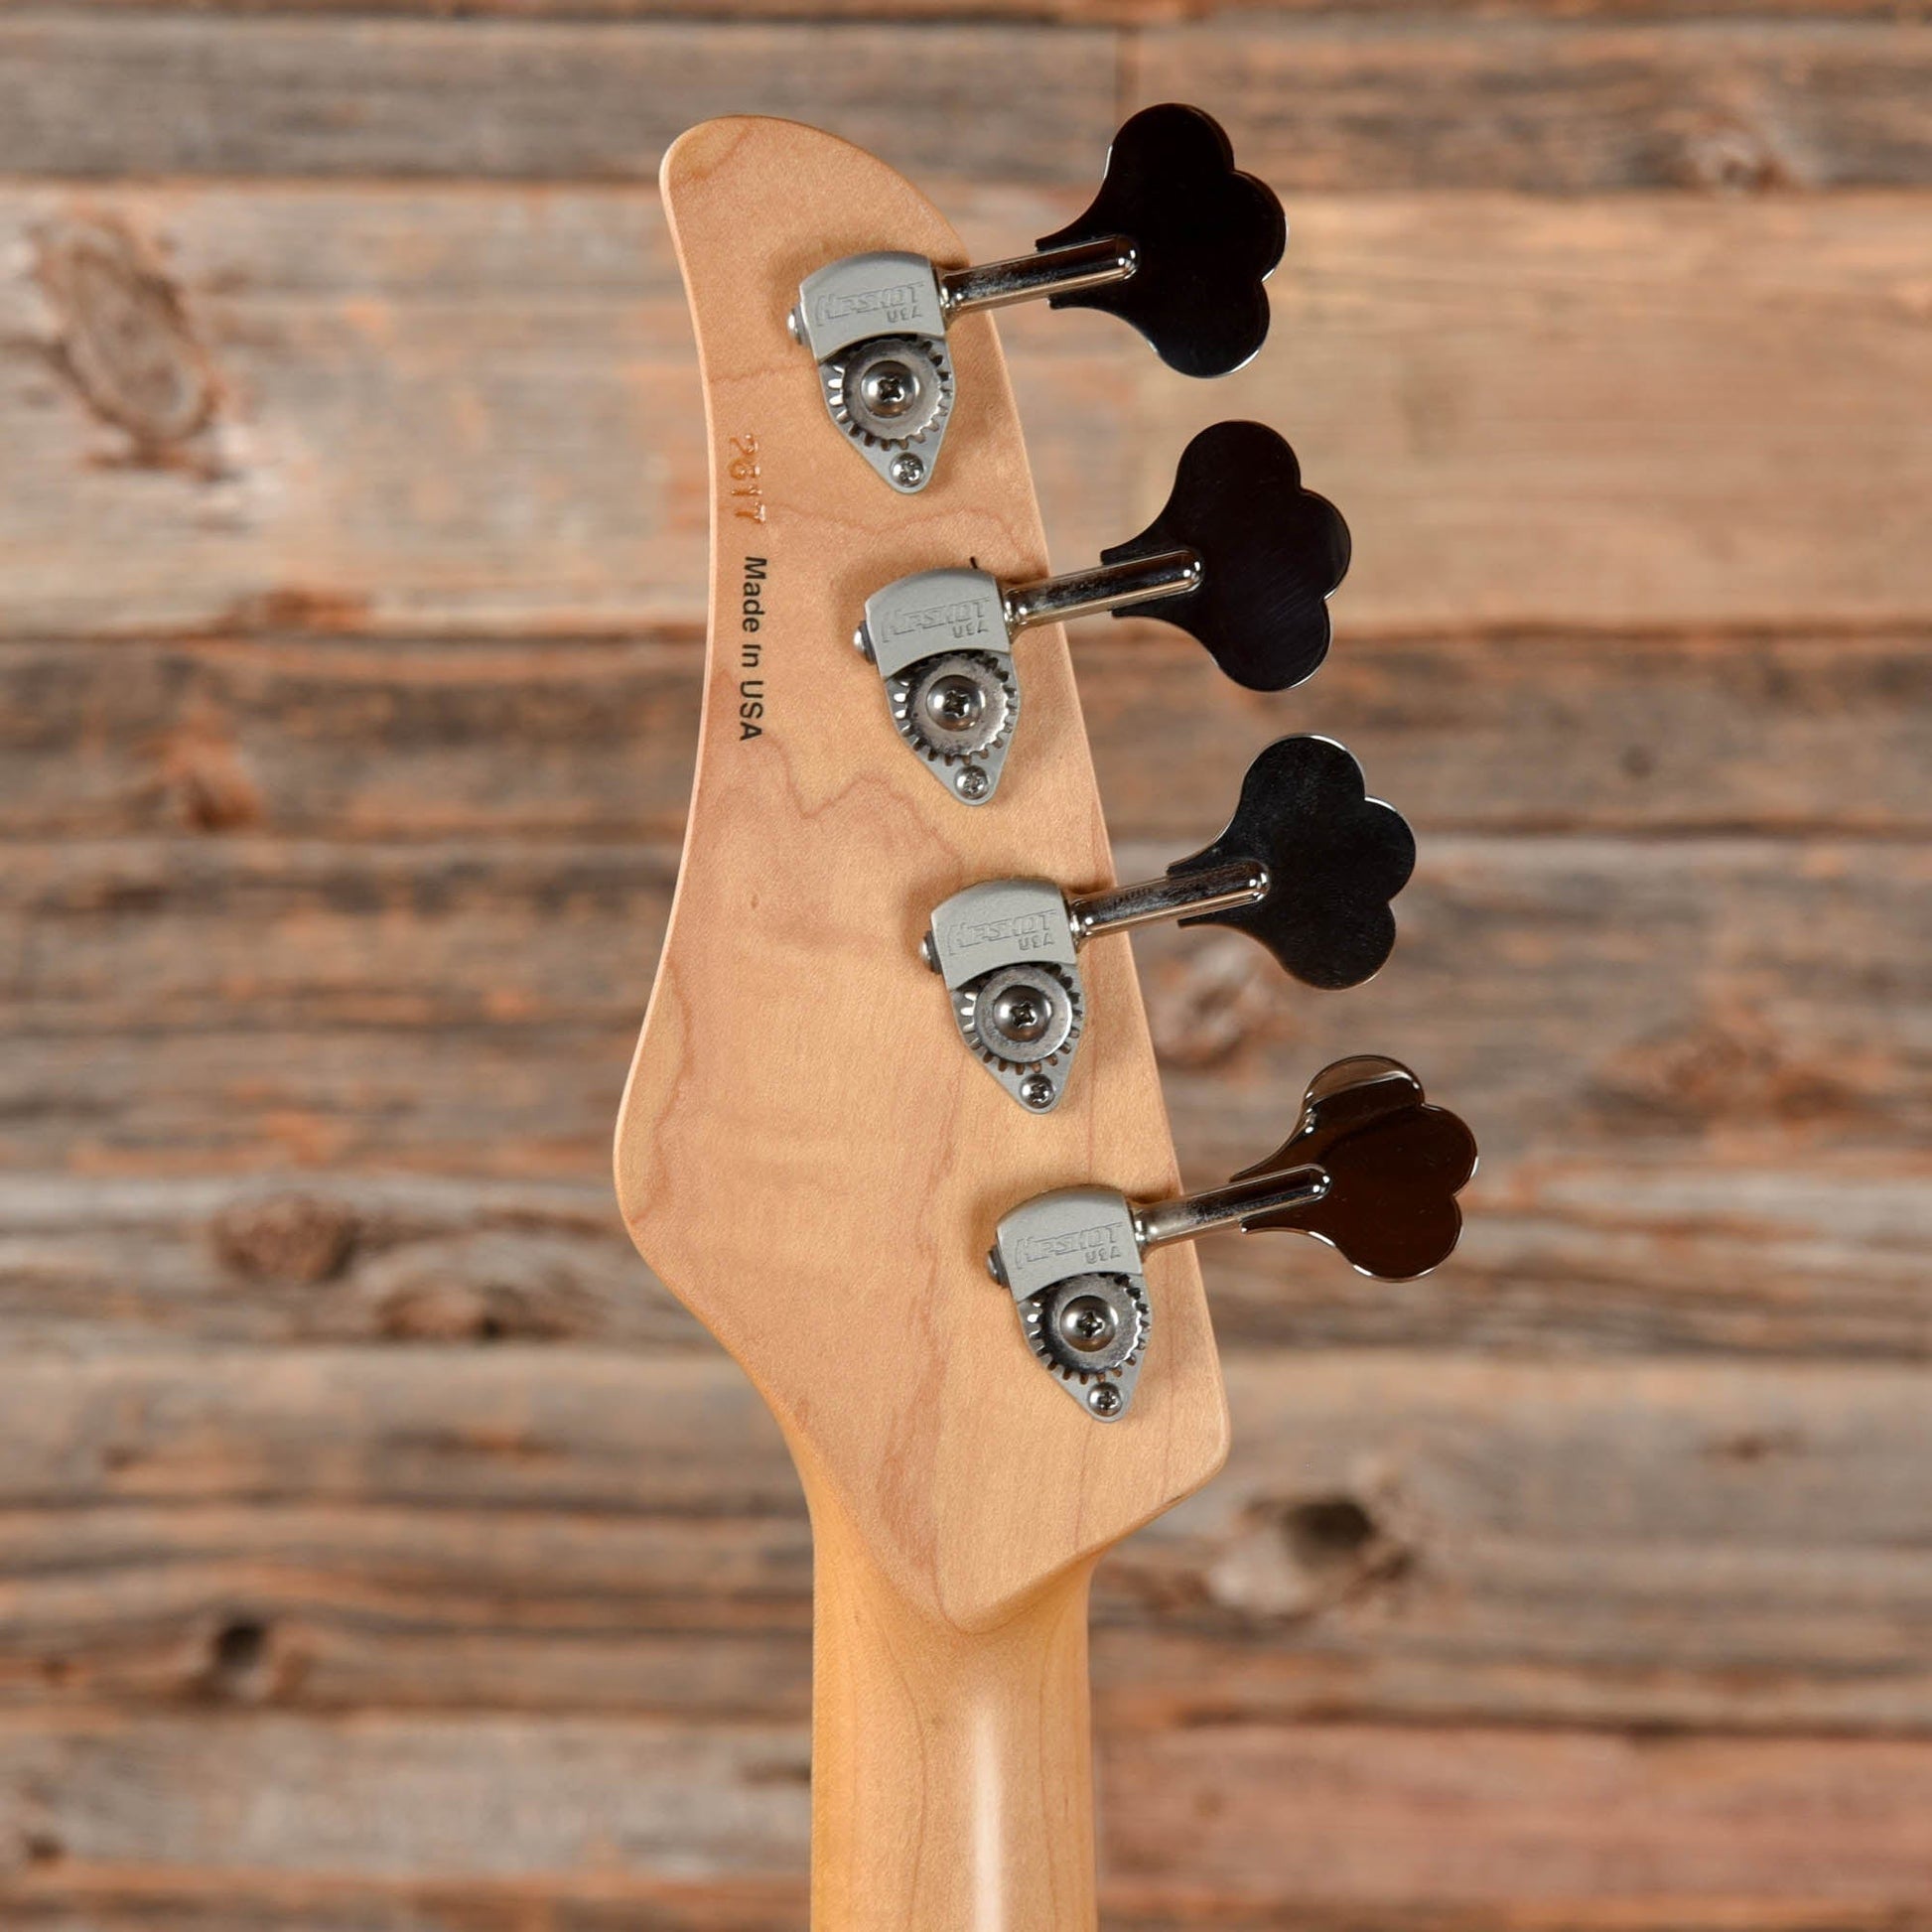 Mike Lull PT4 Aged Sonic Blue 2015 Bass Guitars / 4-String